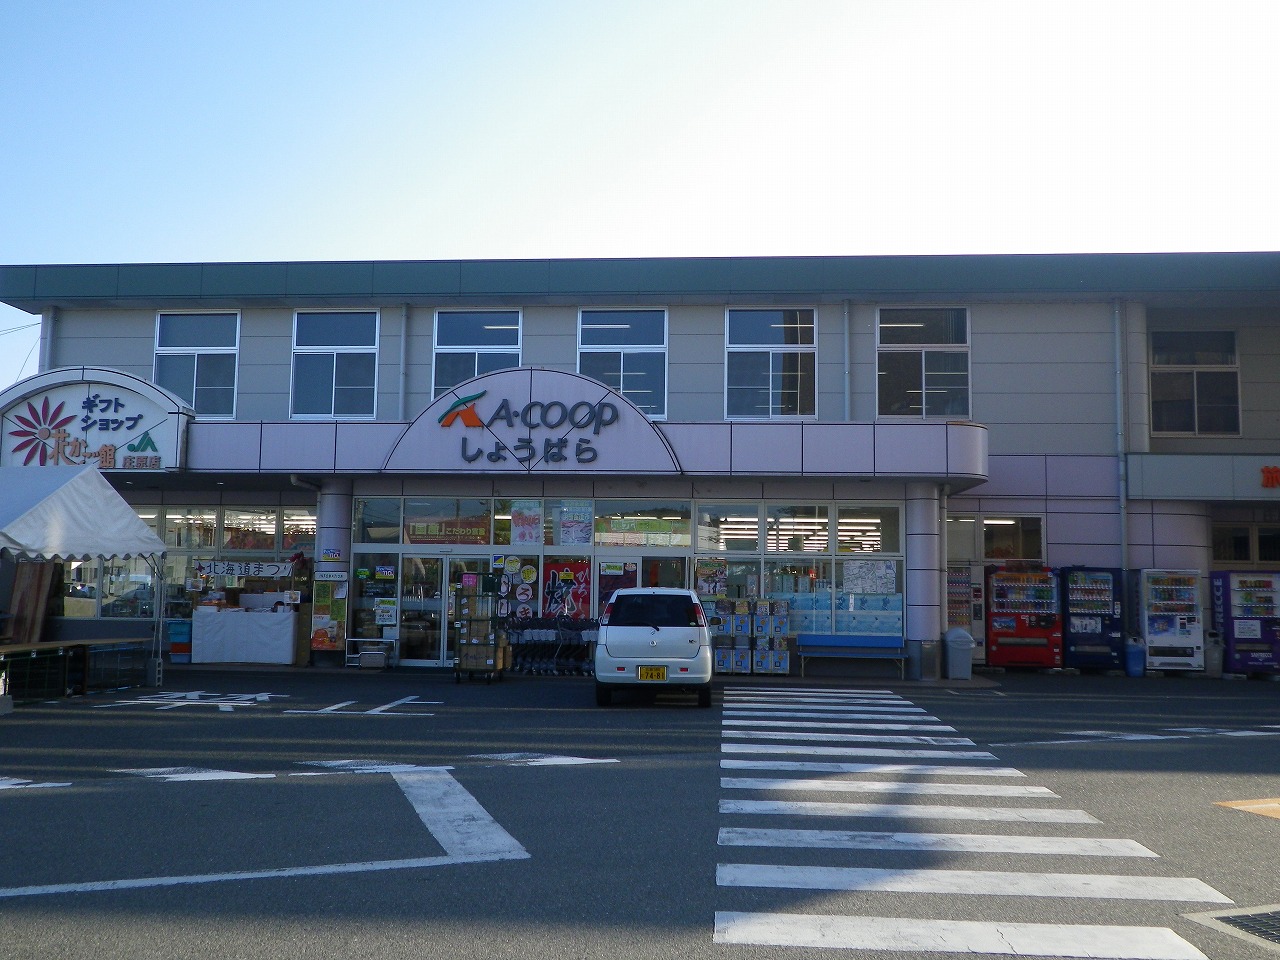 Supermarket. 269m to A Coop Shobara store (Super)